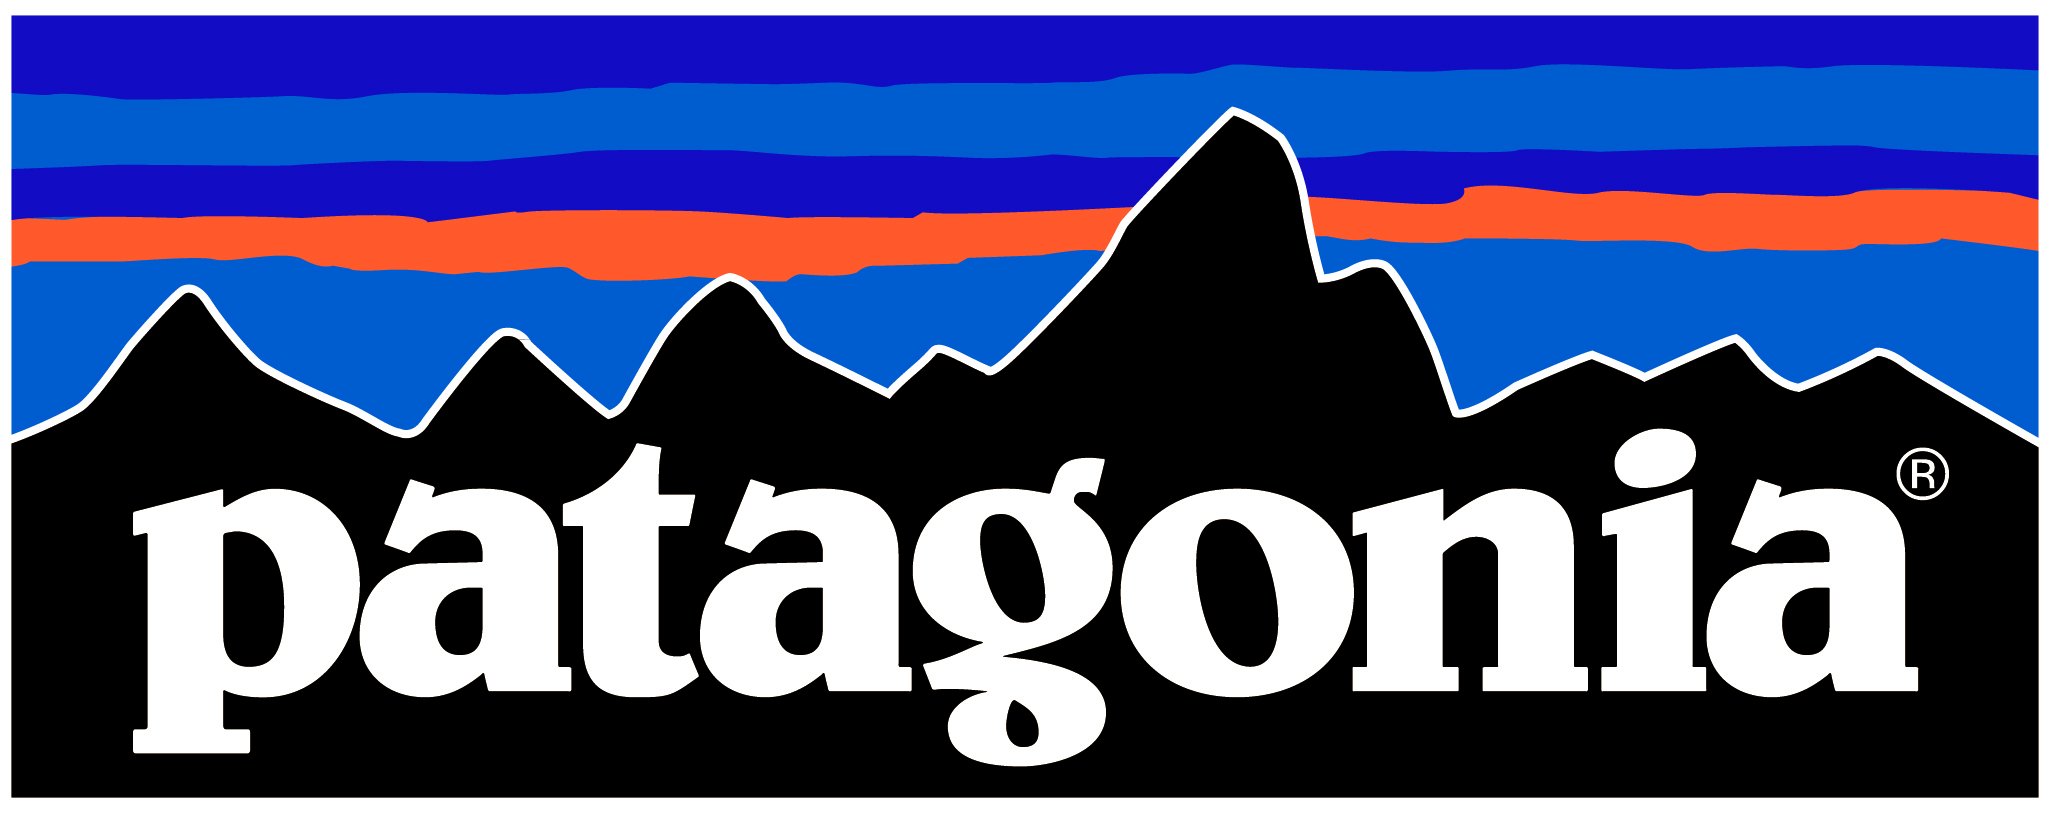 Patagonia - Chattanooga, TN